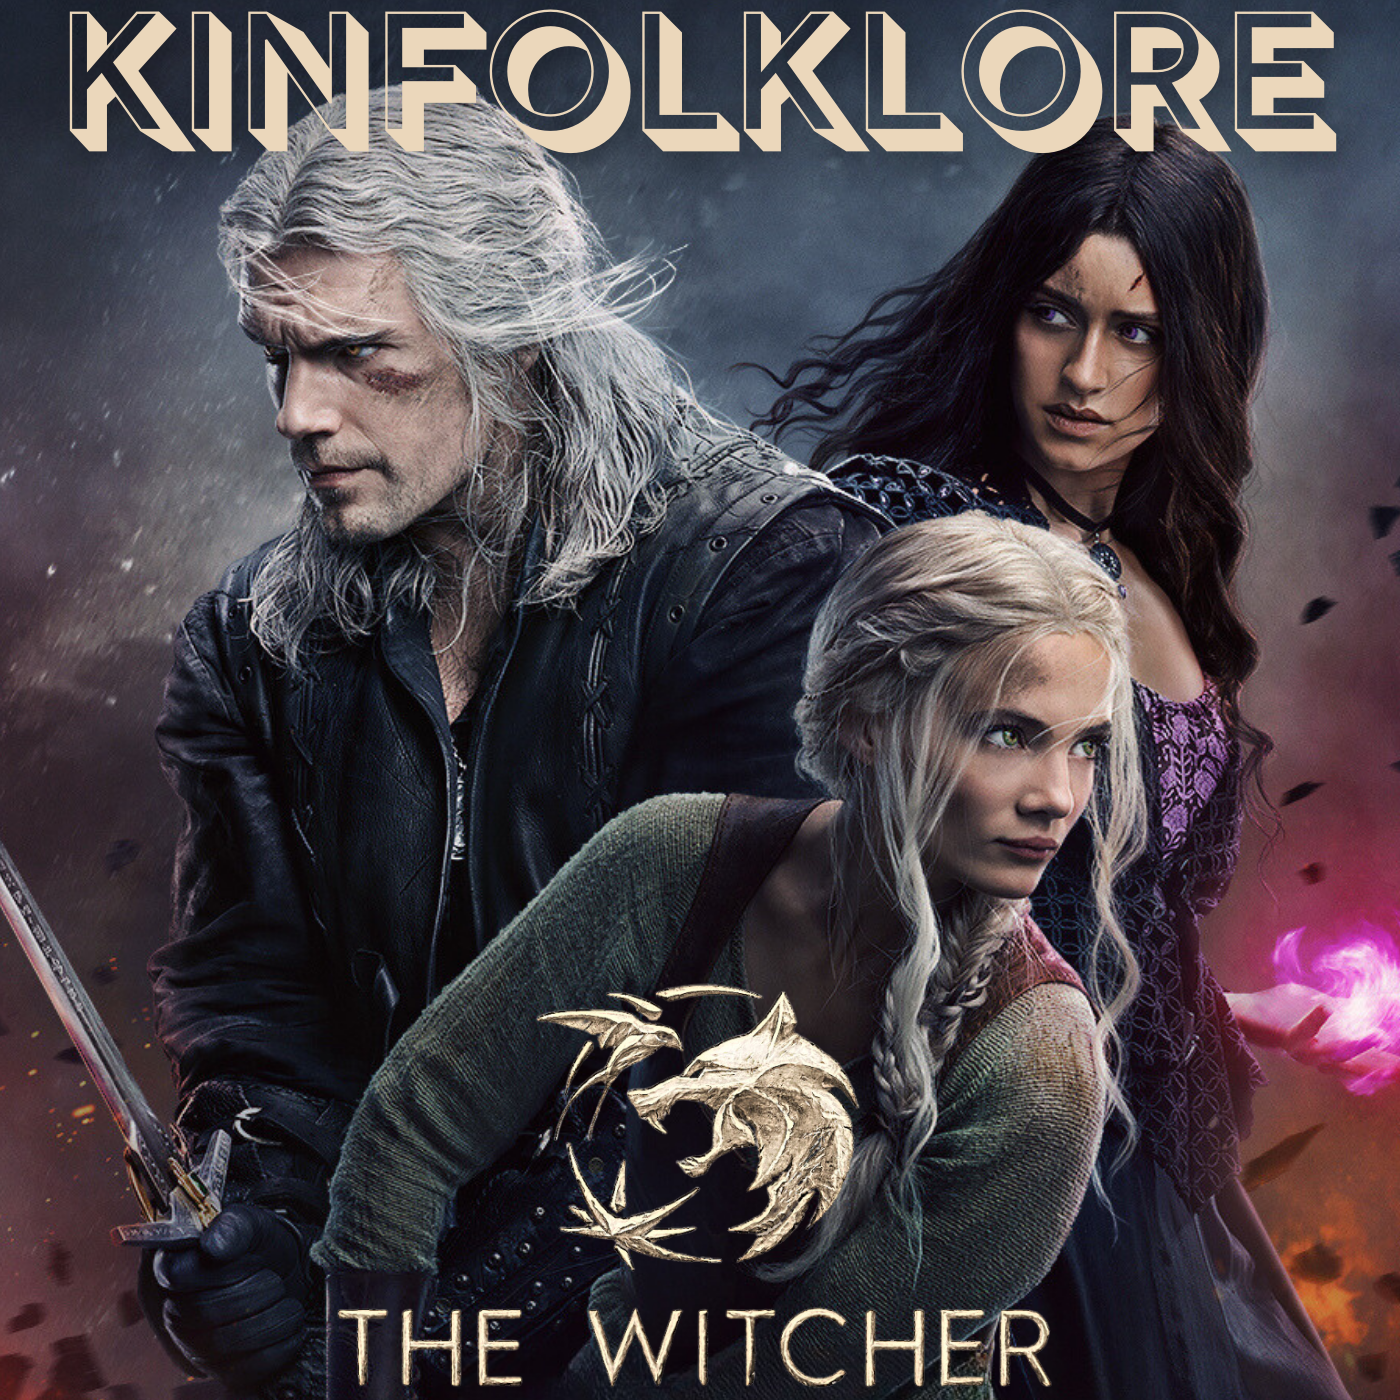 S11 Ep1: Kinfolklore: Witcher Season 3 (Episode 1 & 2)